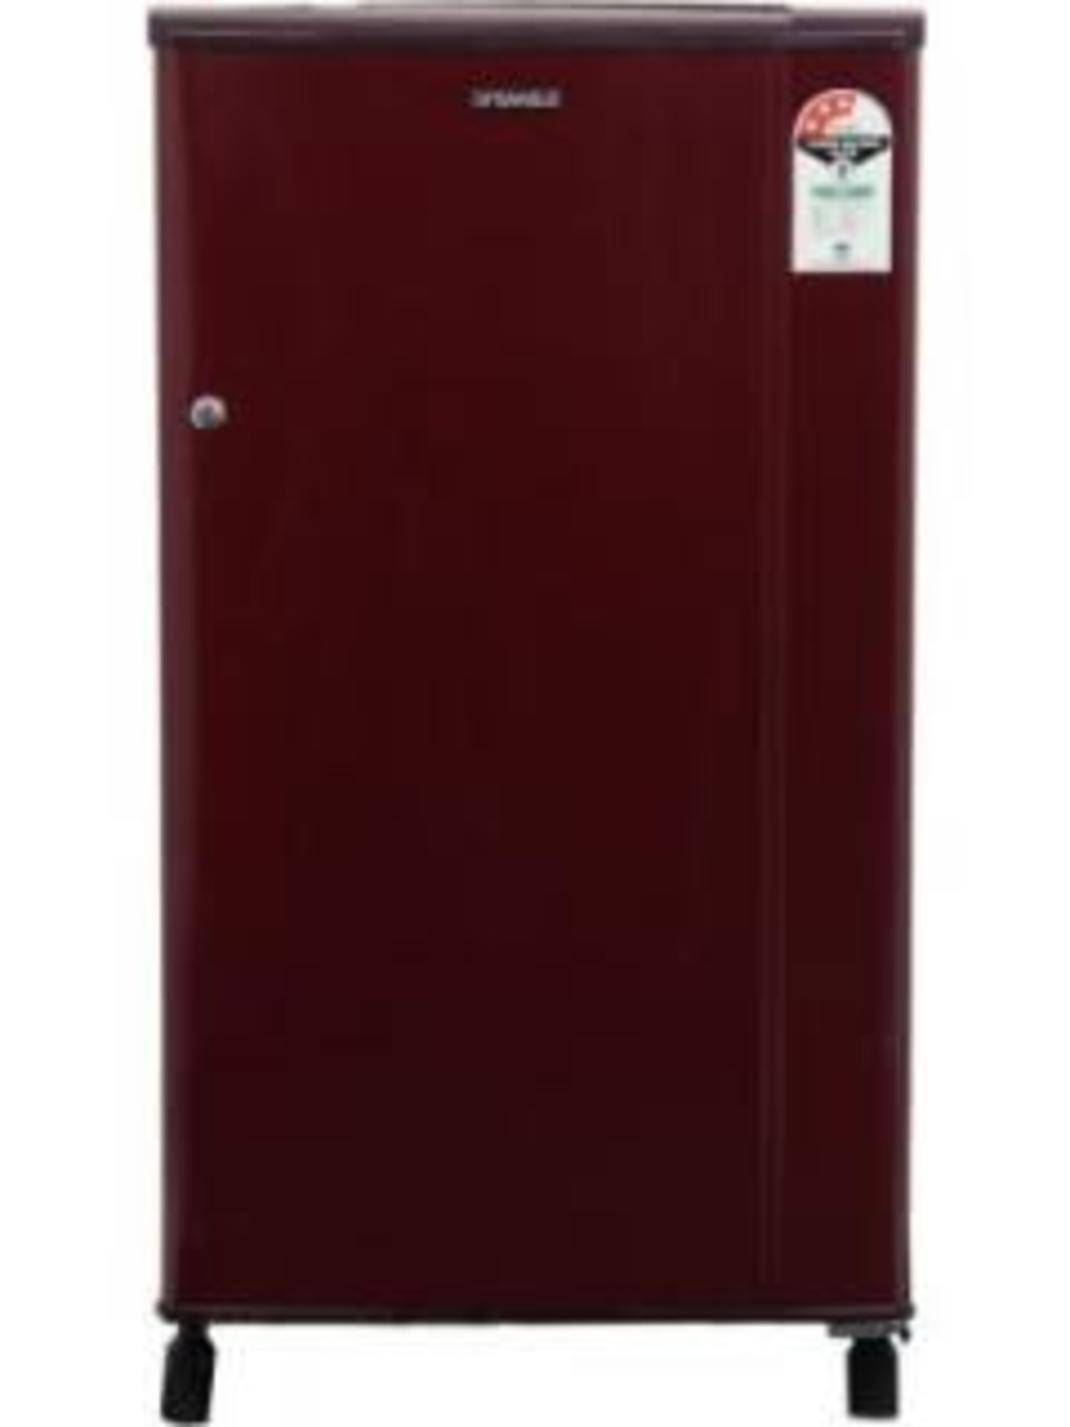 compare-sansui-sh163bbr-fda-150-ltr-single-door-refrigerator-vs